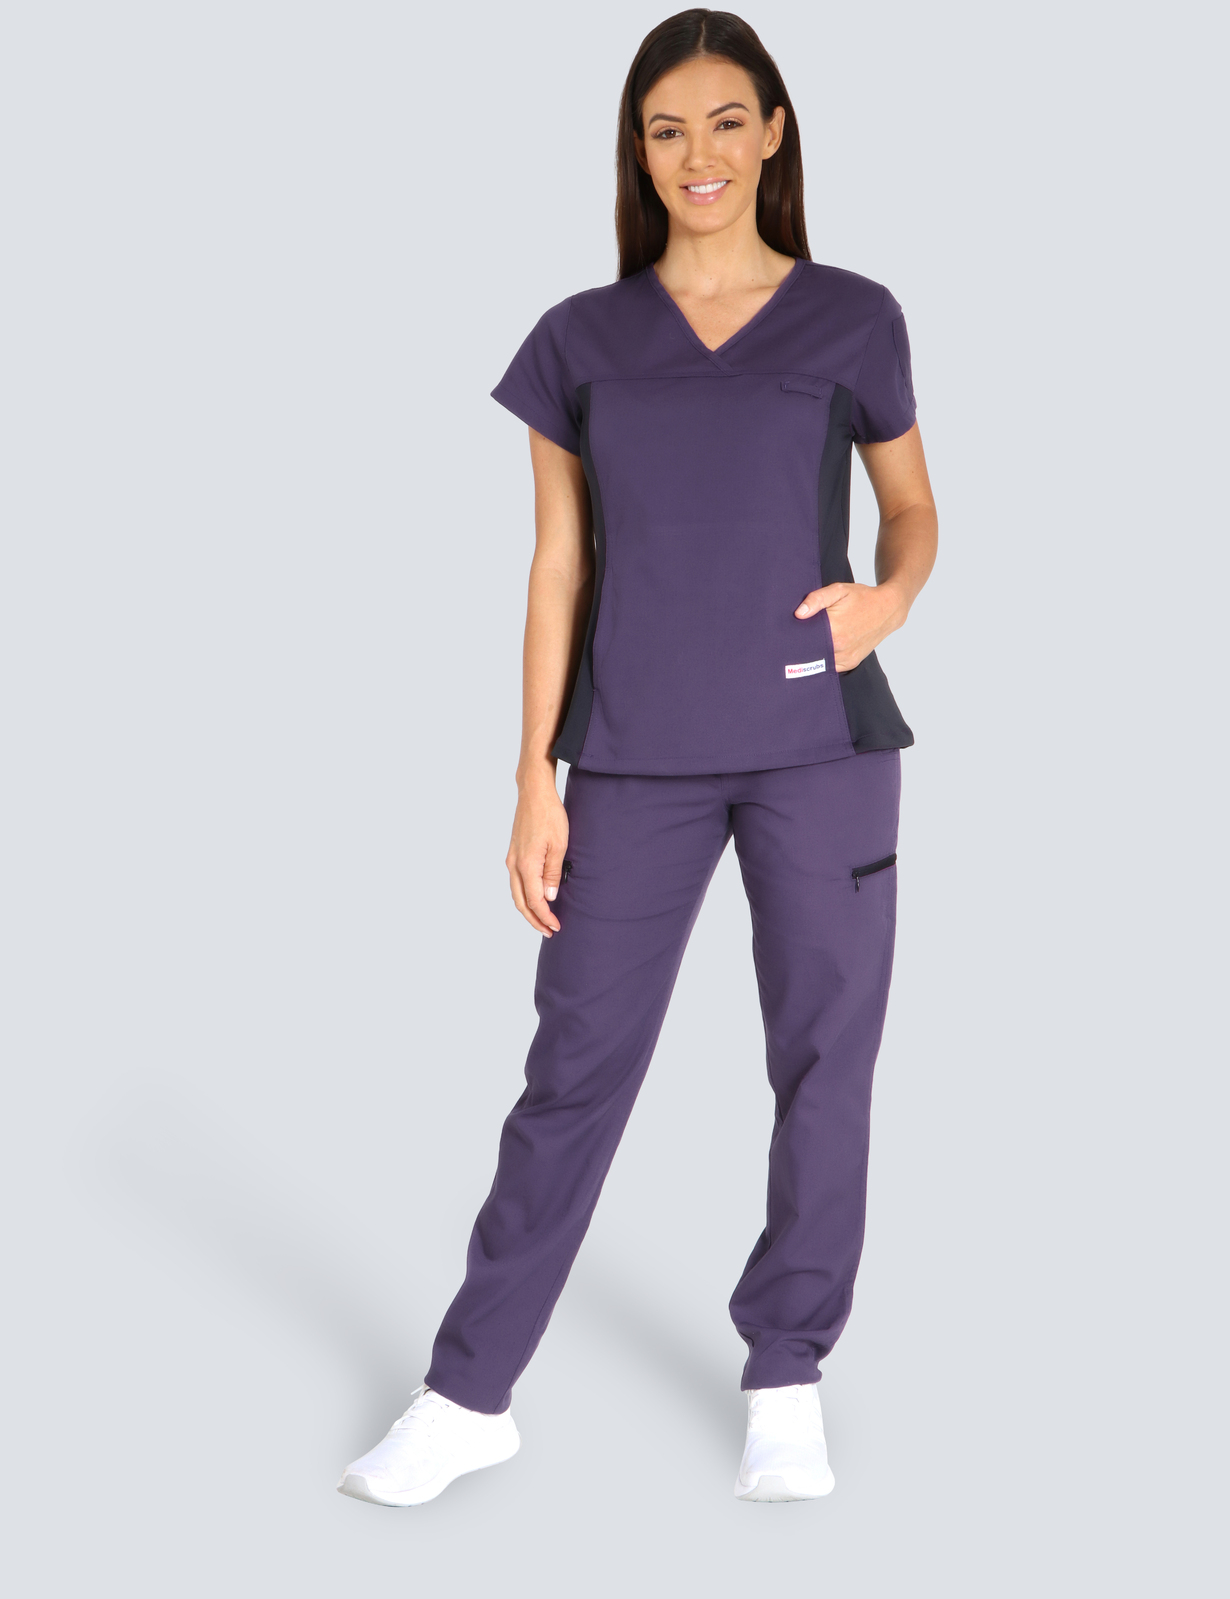 James Cook University Vet - Nurses (Women's Fit Spandex Scrub Top and Cargo Pants in Aubergine incl Logos)